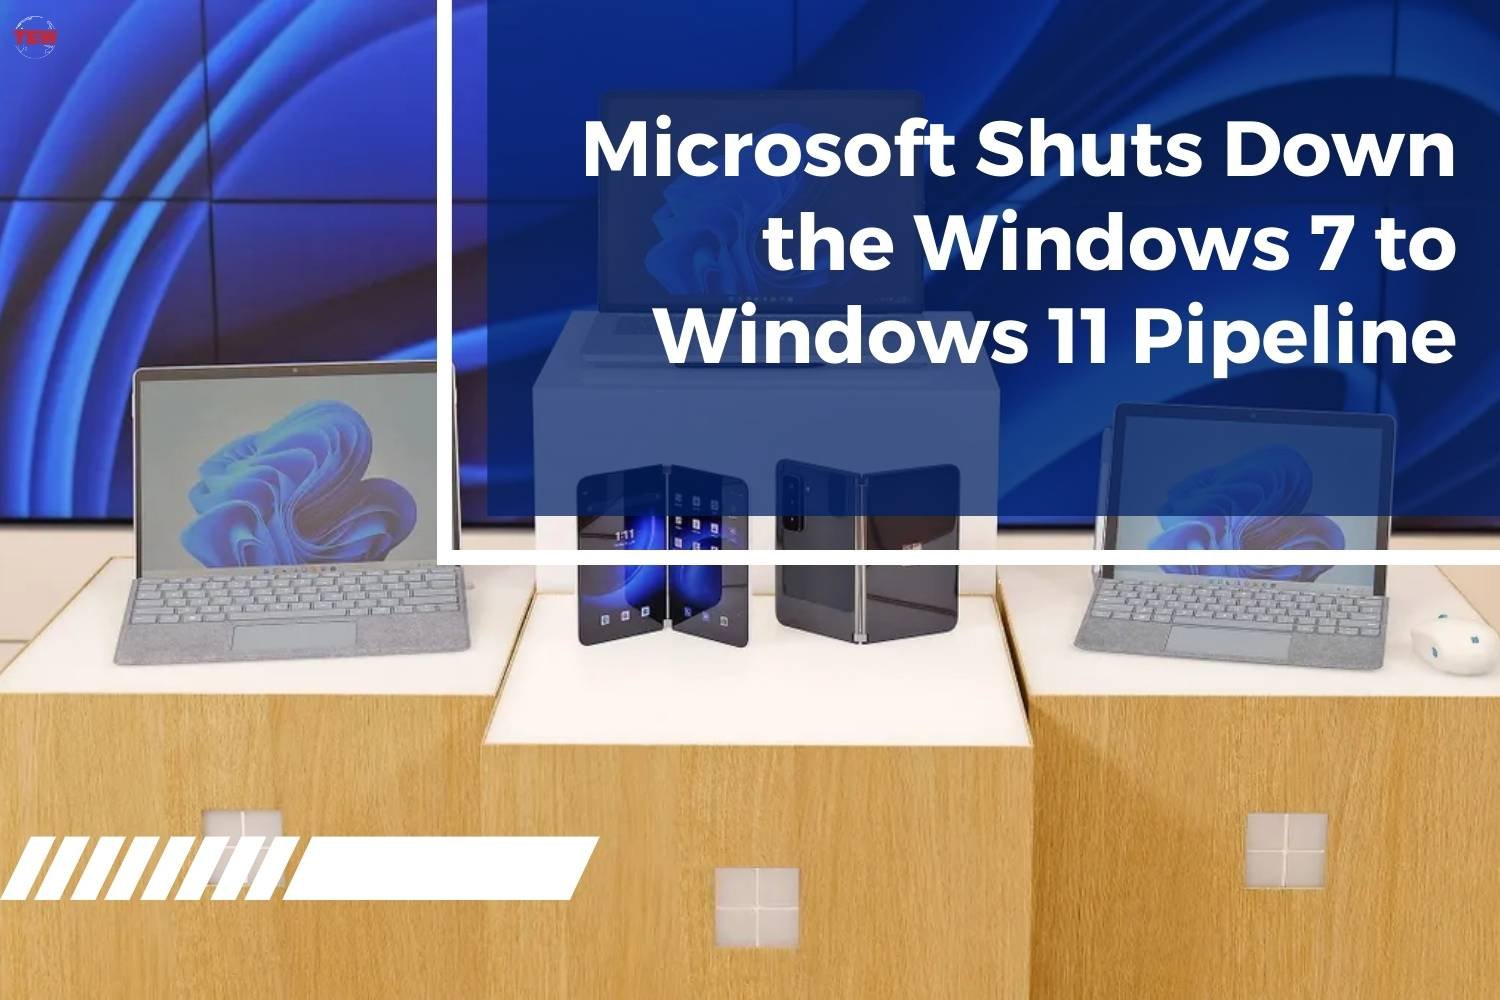 Microsoft Shuts Down the Windows 7 to Windows 11 Pipeline | The Enterprise World